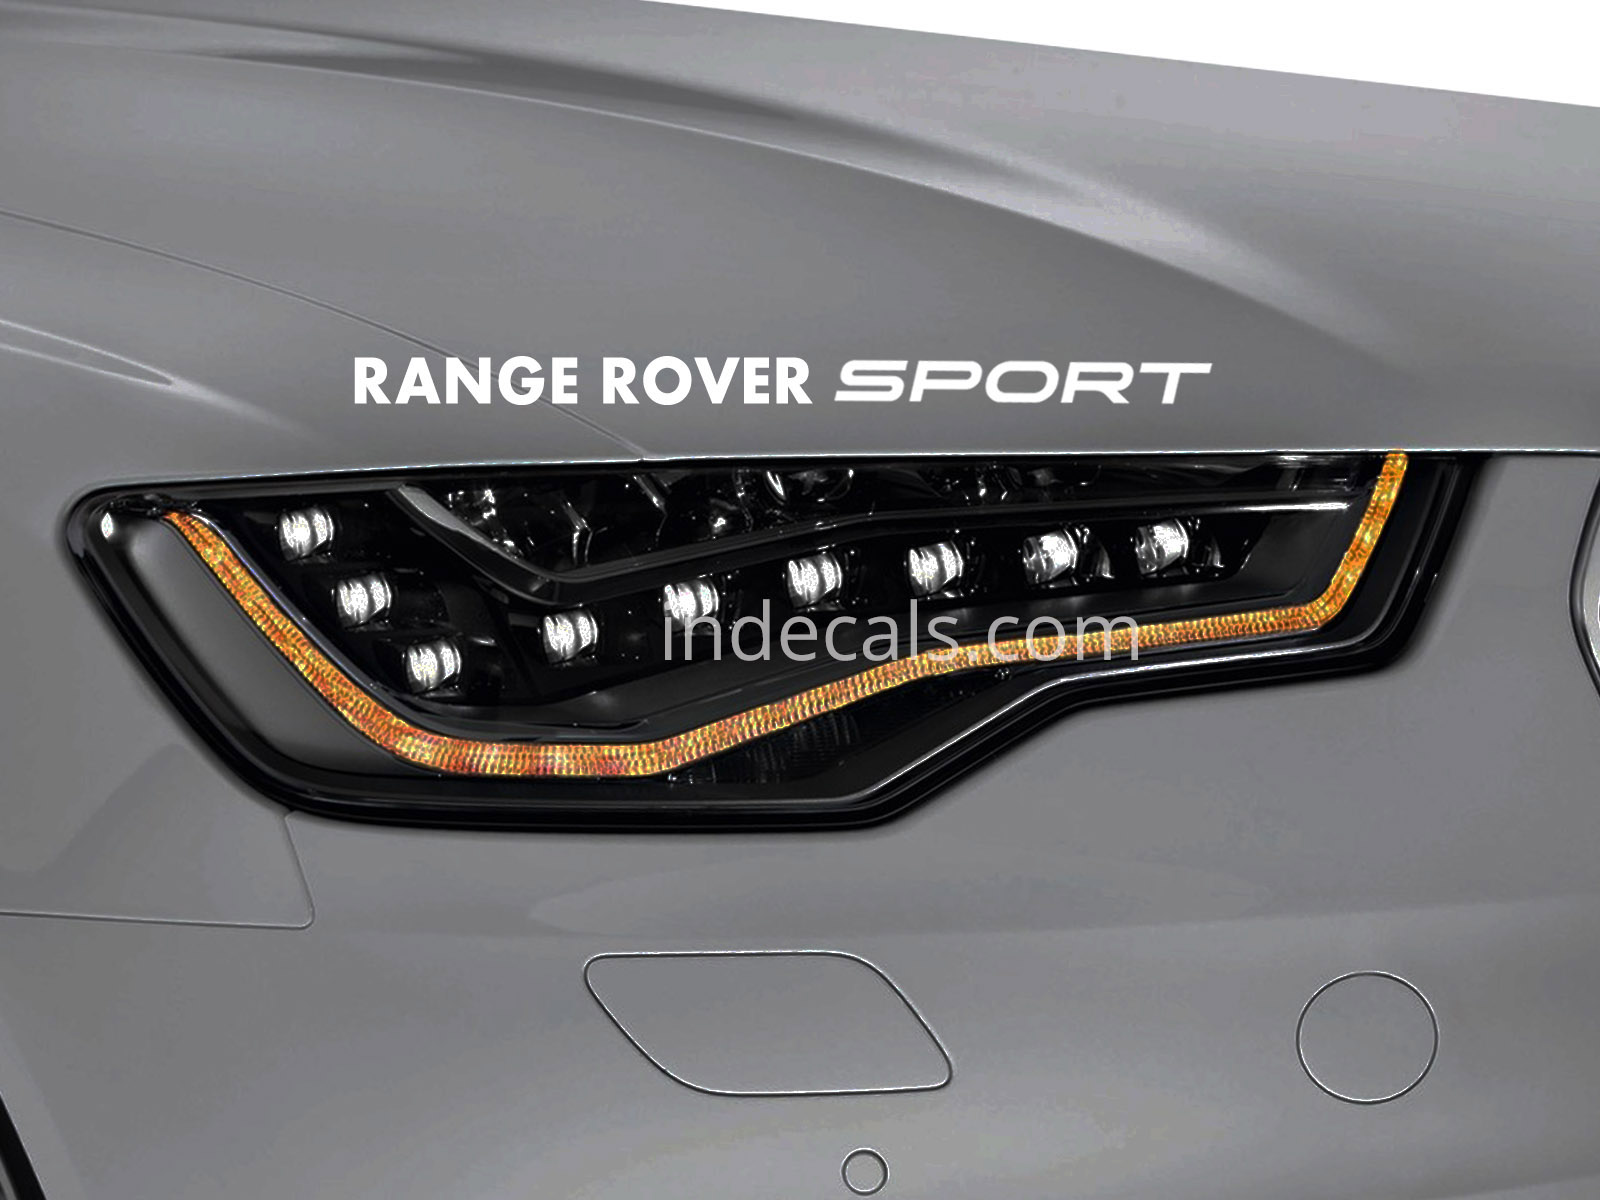 1 x Range Rover Sport Sticker for Eyebrow - White